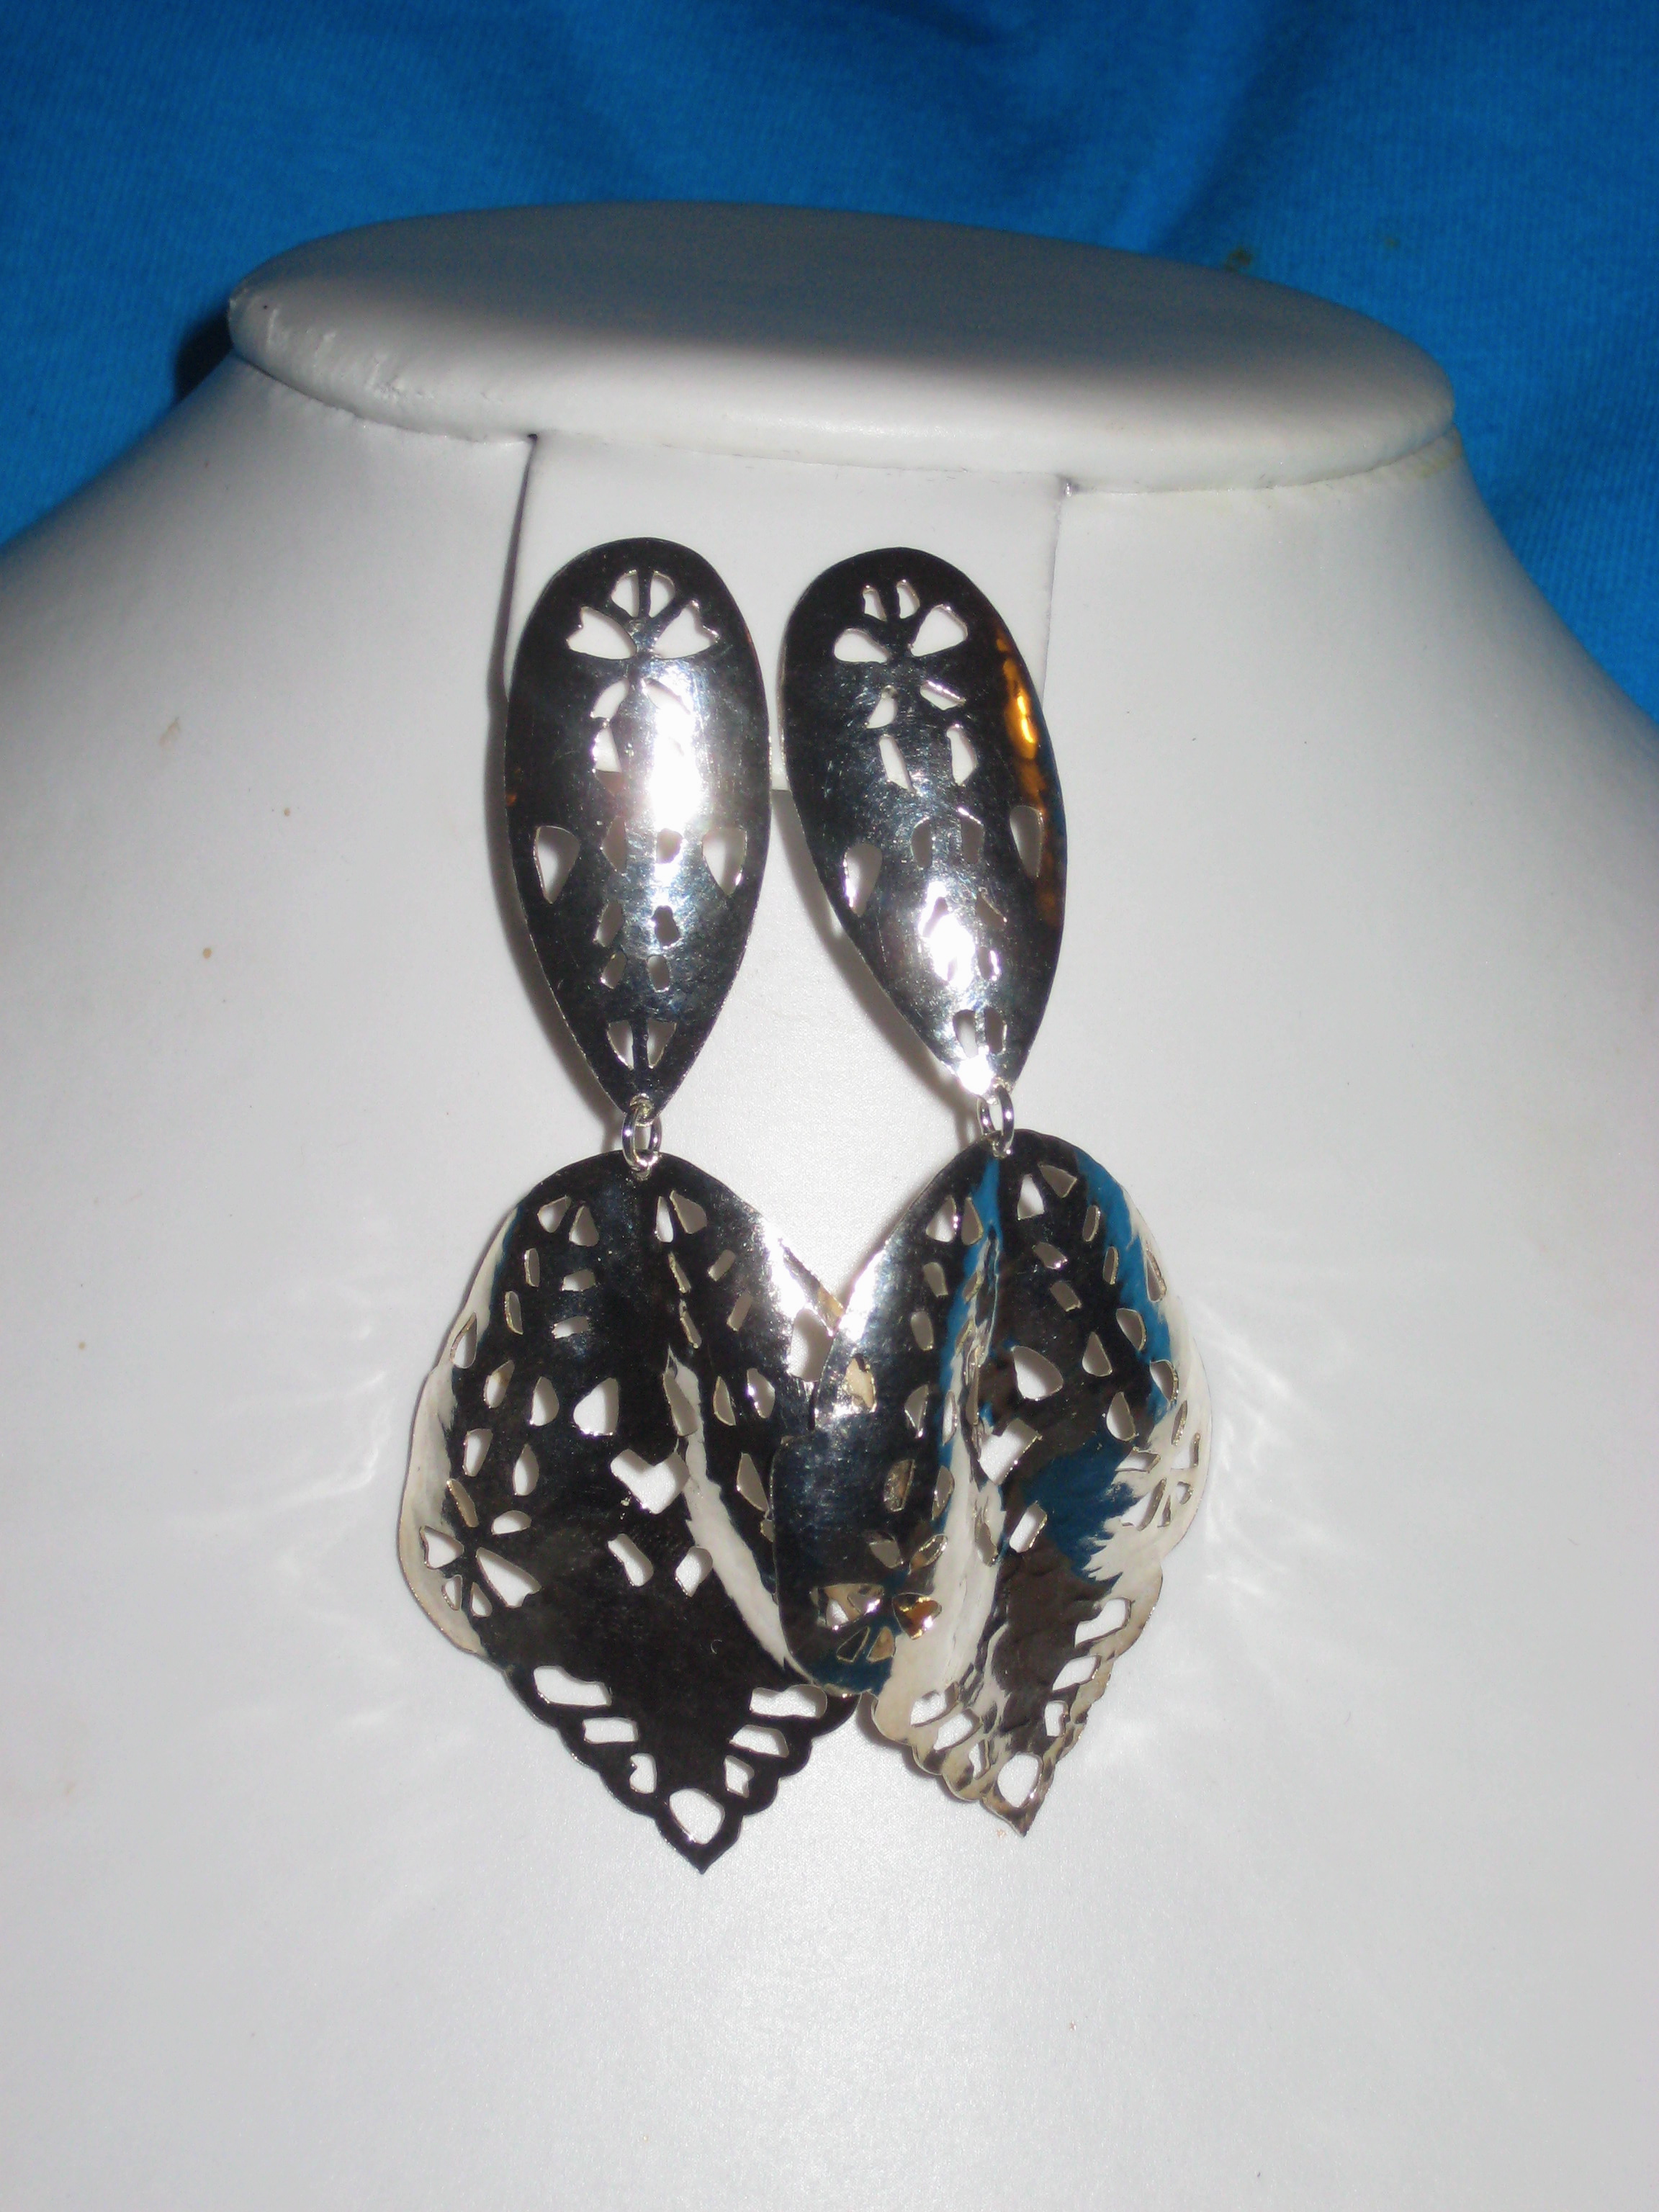 beautiful hand made sterling silver earrings. 2.5"long